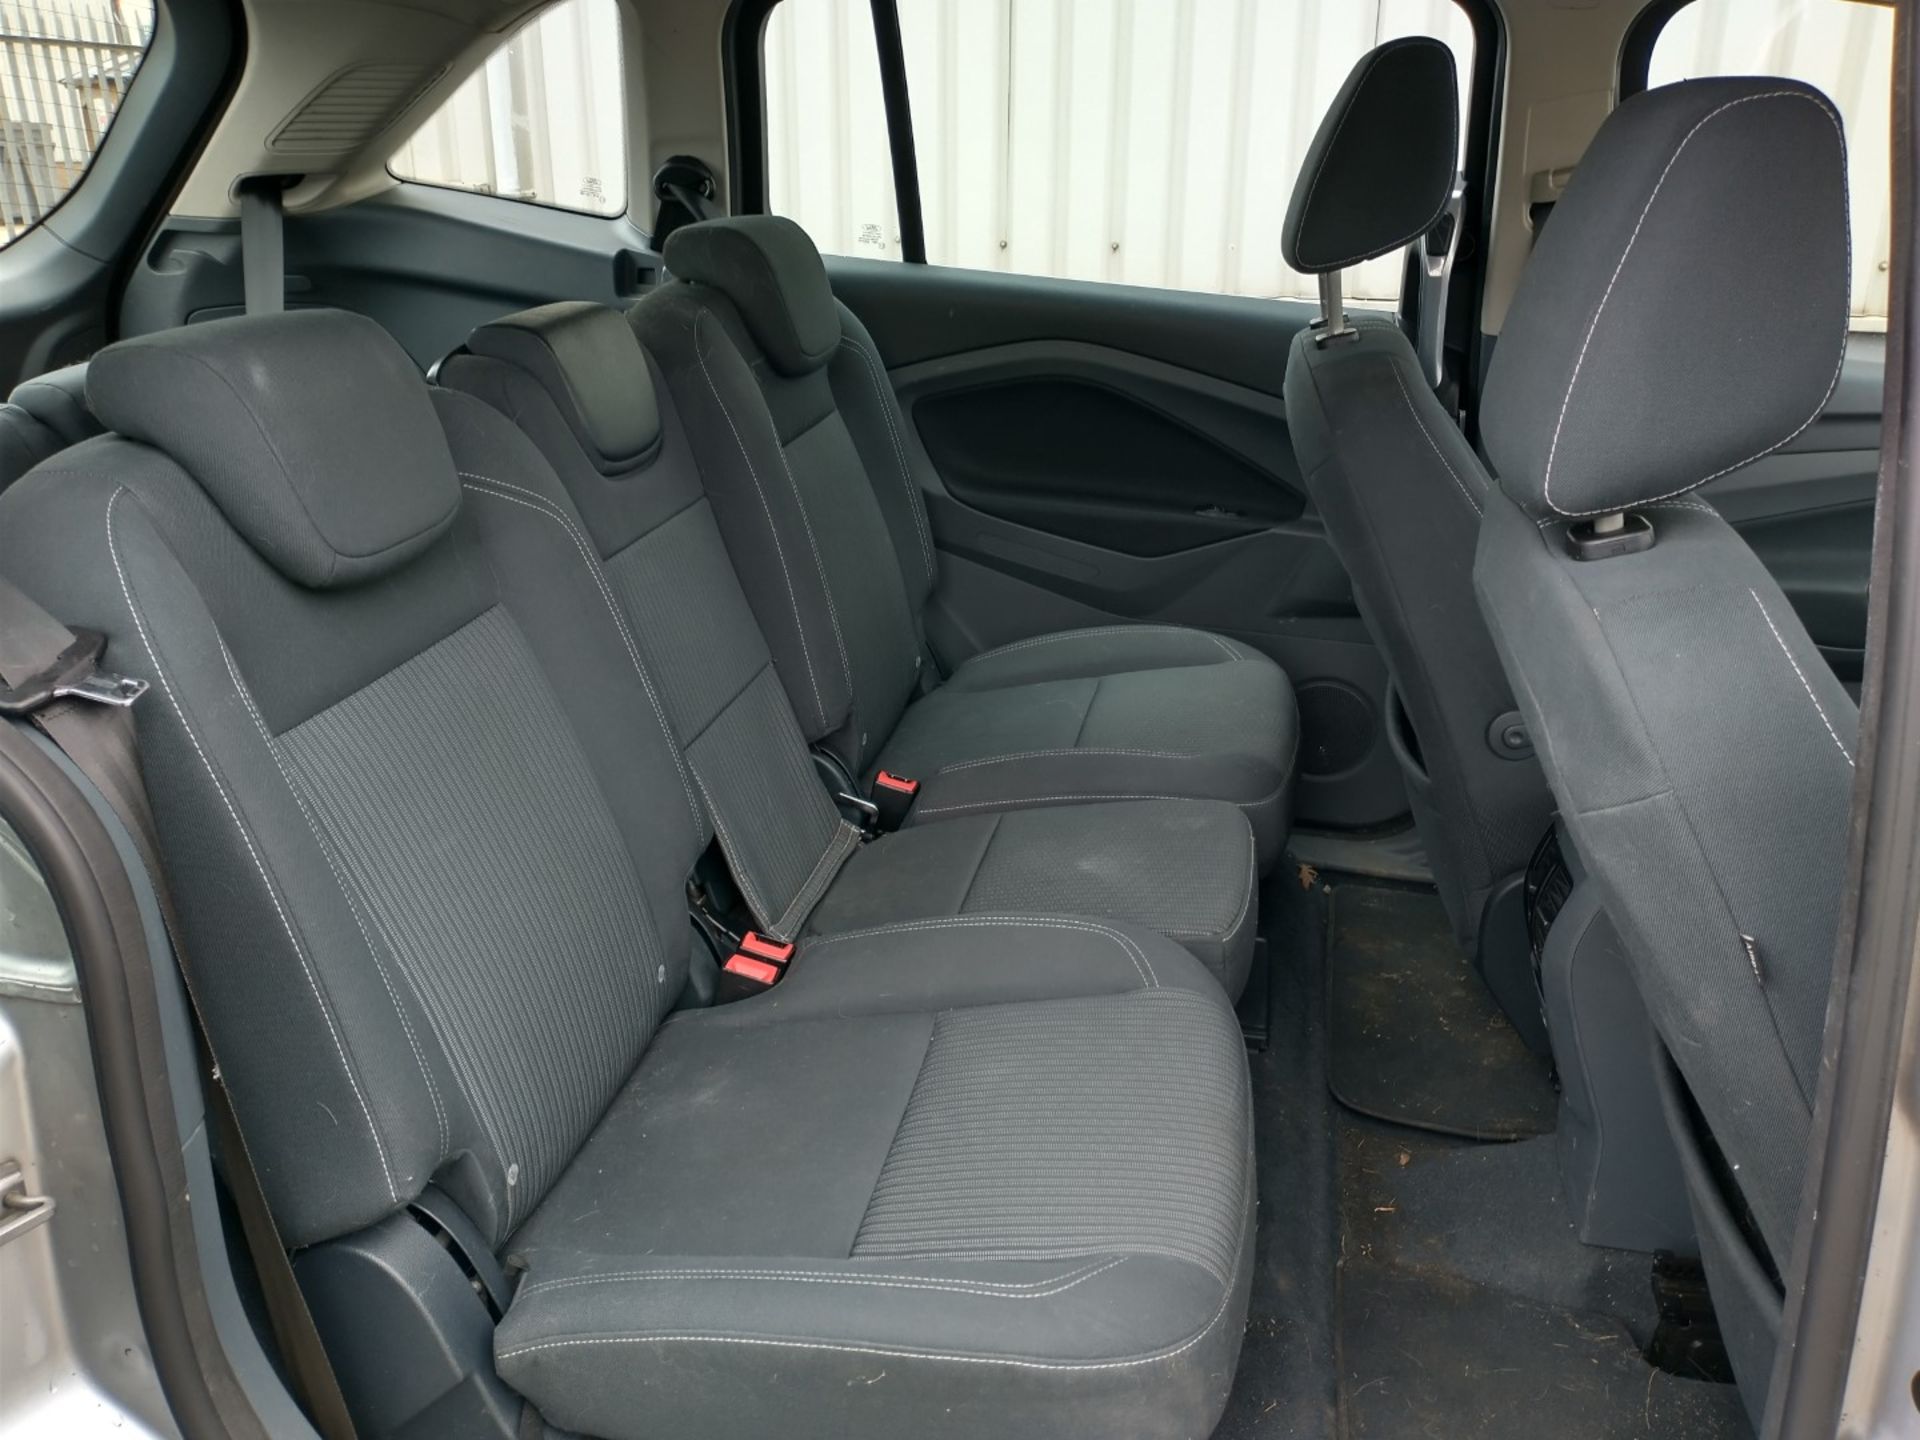 2012 Ford Grand C-Max Titanium Tdci 115 7 Seat MPV - CL505 - Ref: VVS0002 - NO VAT ON THE HAMMER - L - Image 11 of 20